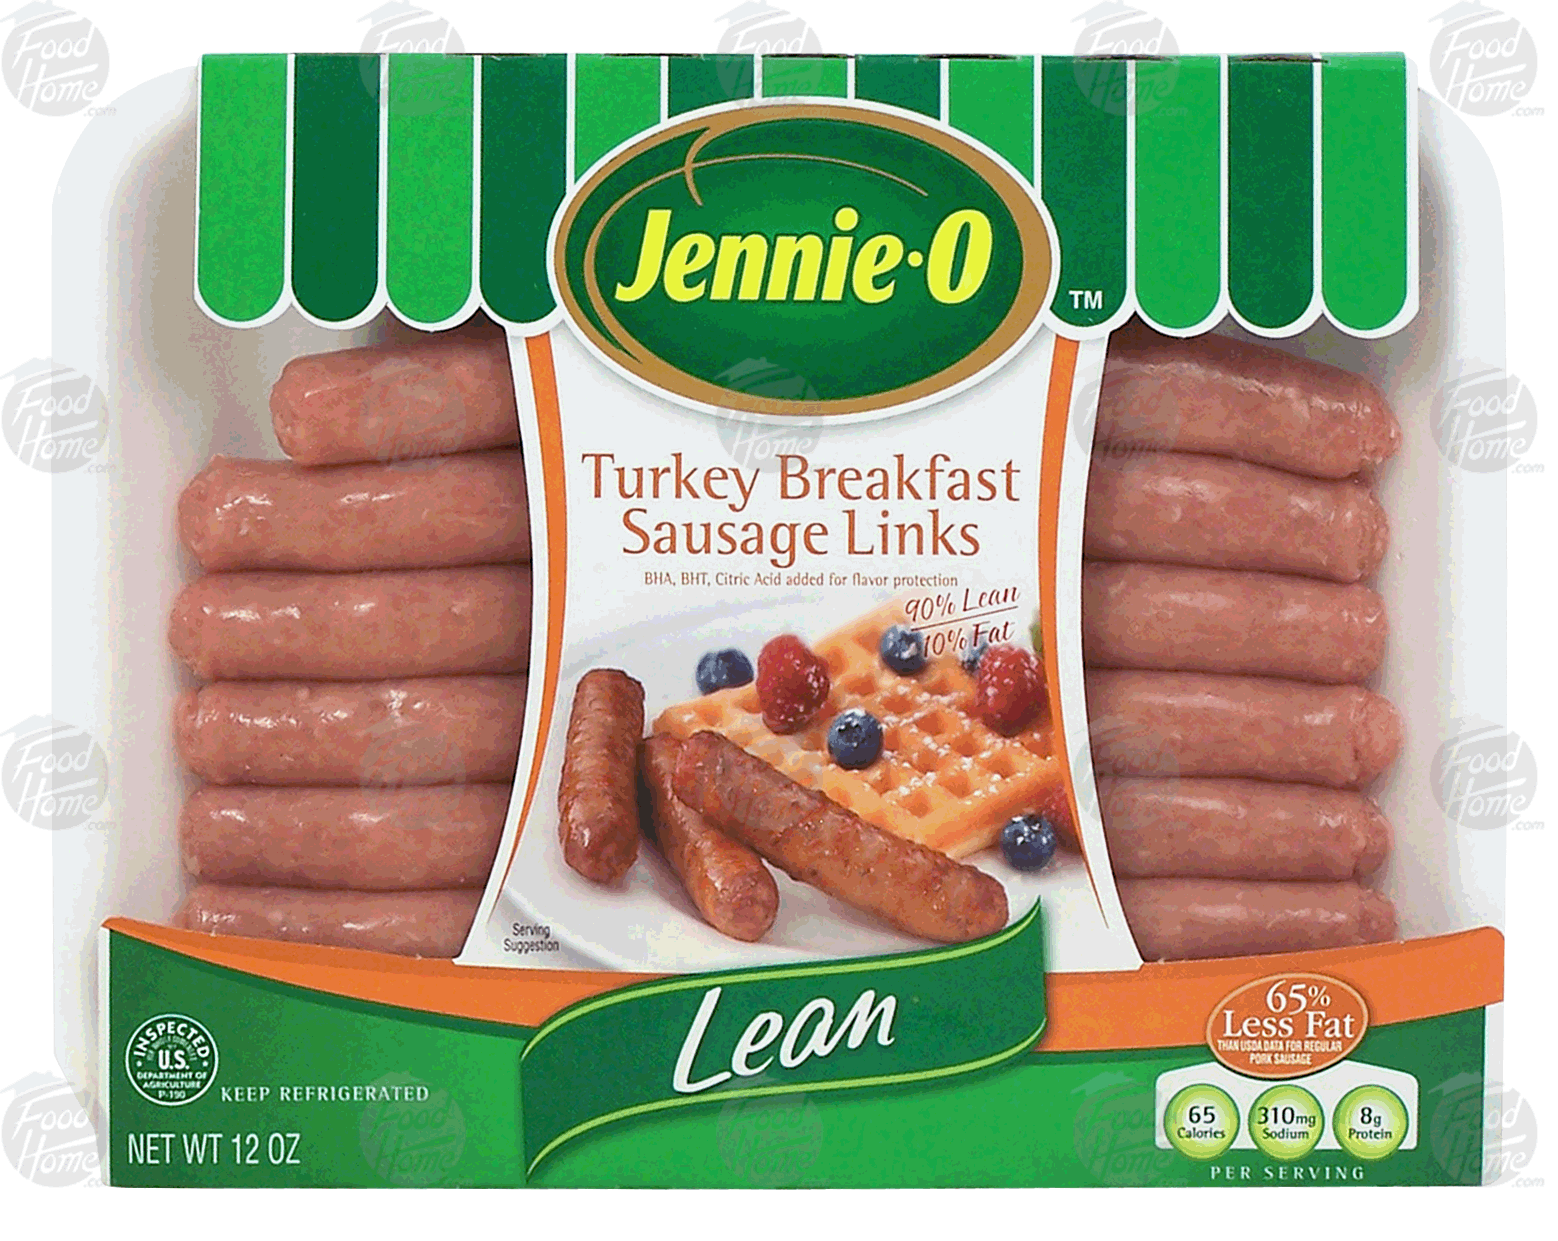 Jennie-o Lean turkey breakfast sausage links Full-Size Picture